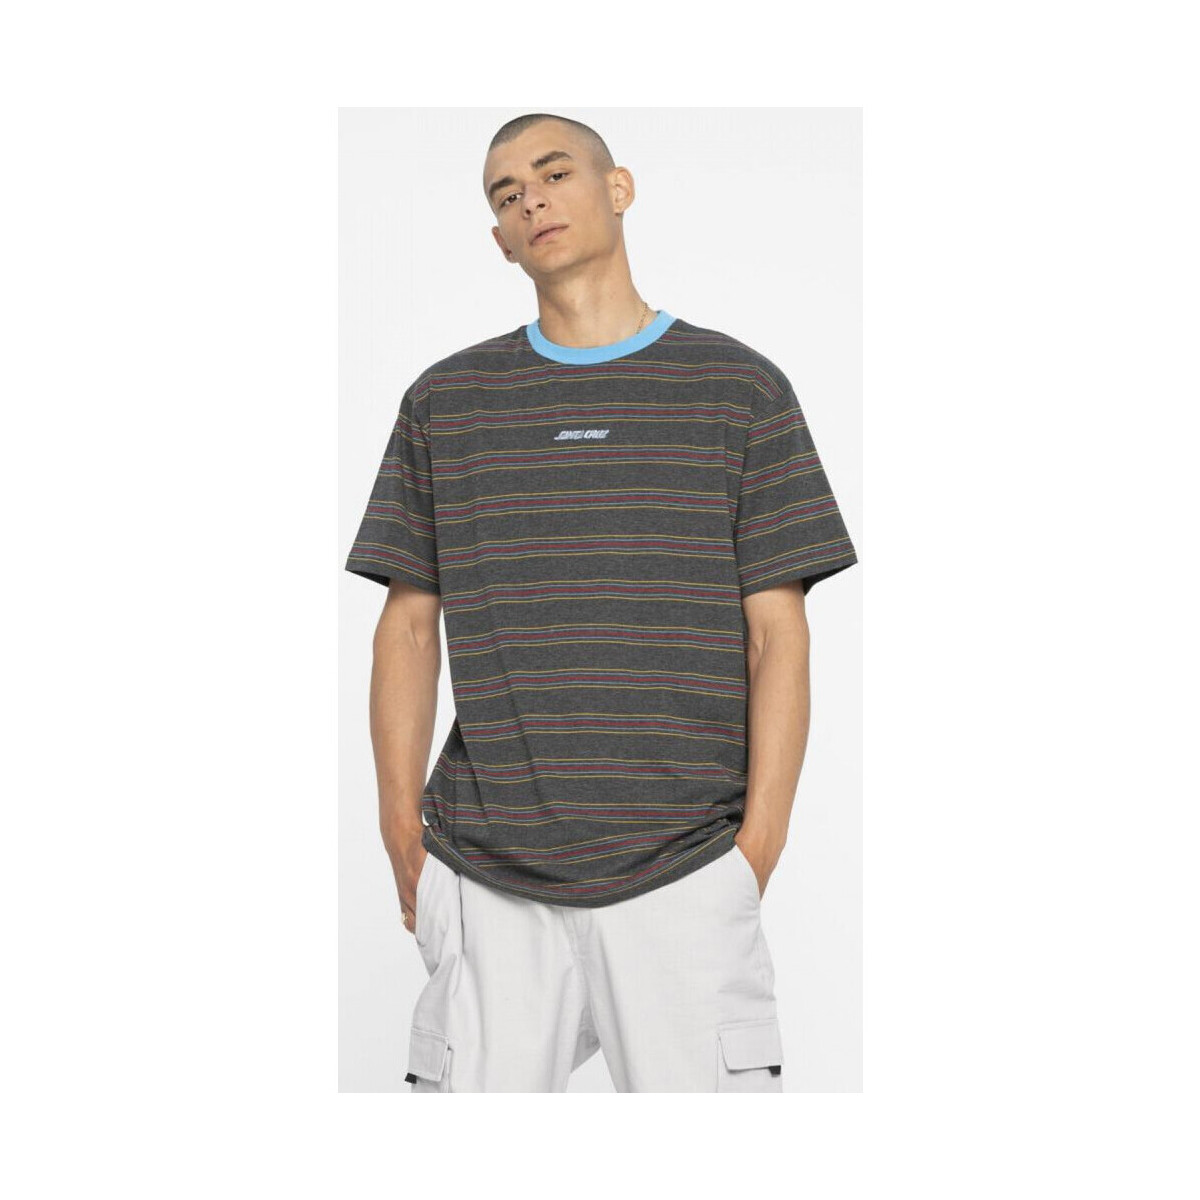 textil Herre T-shirts & poloer Santa Cruz Classic strip stripe t-shirt Sort